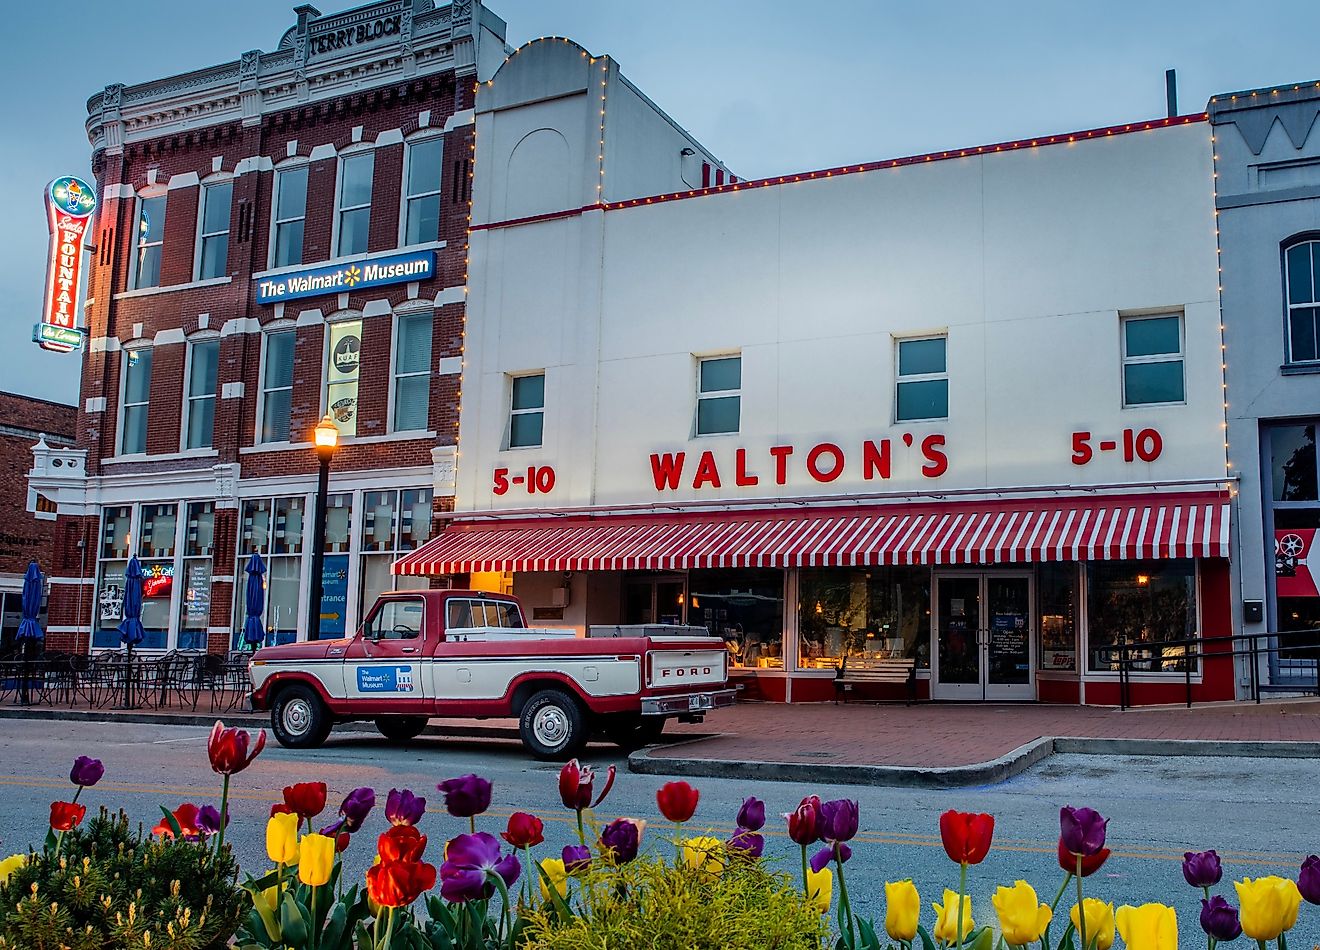 Downtown Bentonville, Arkansas. Image credit RozenskiP via Shutterstock